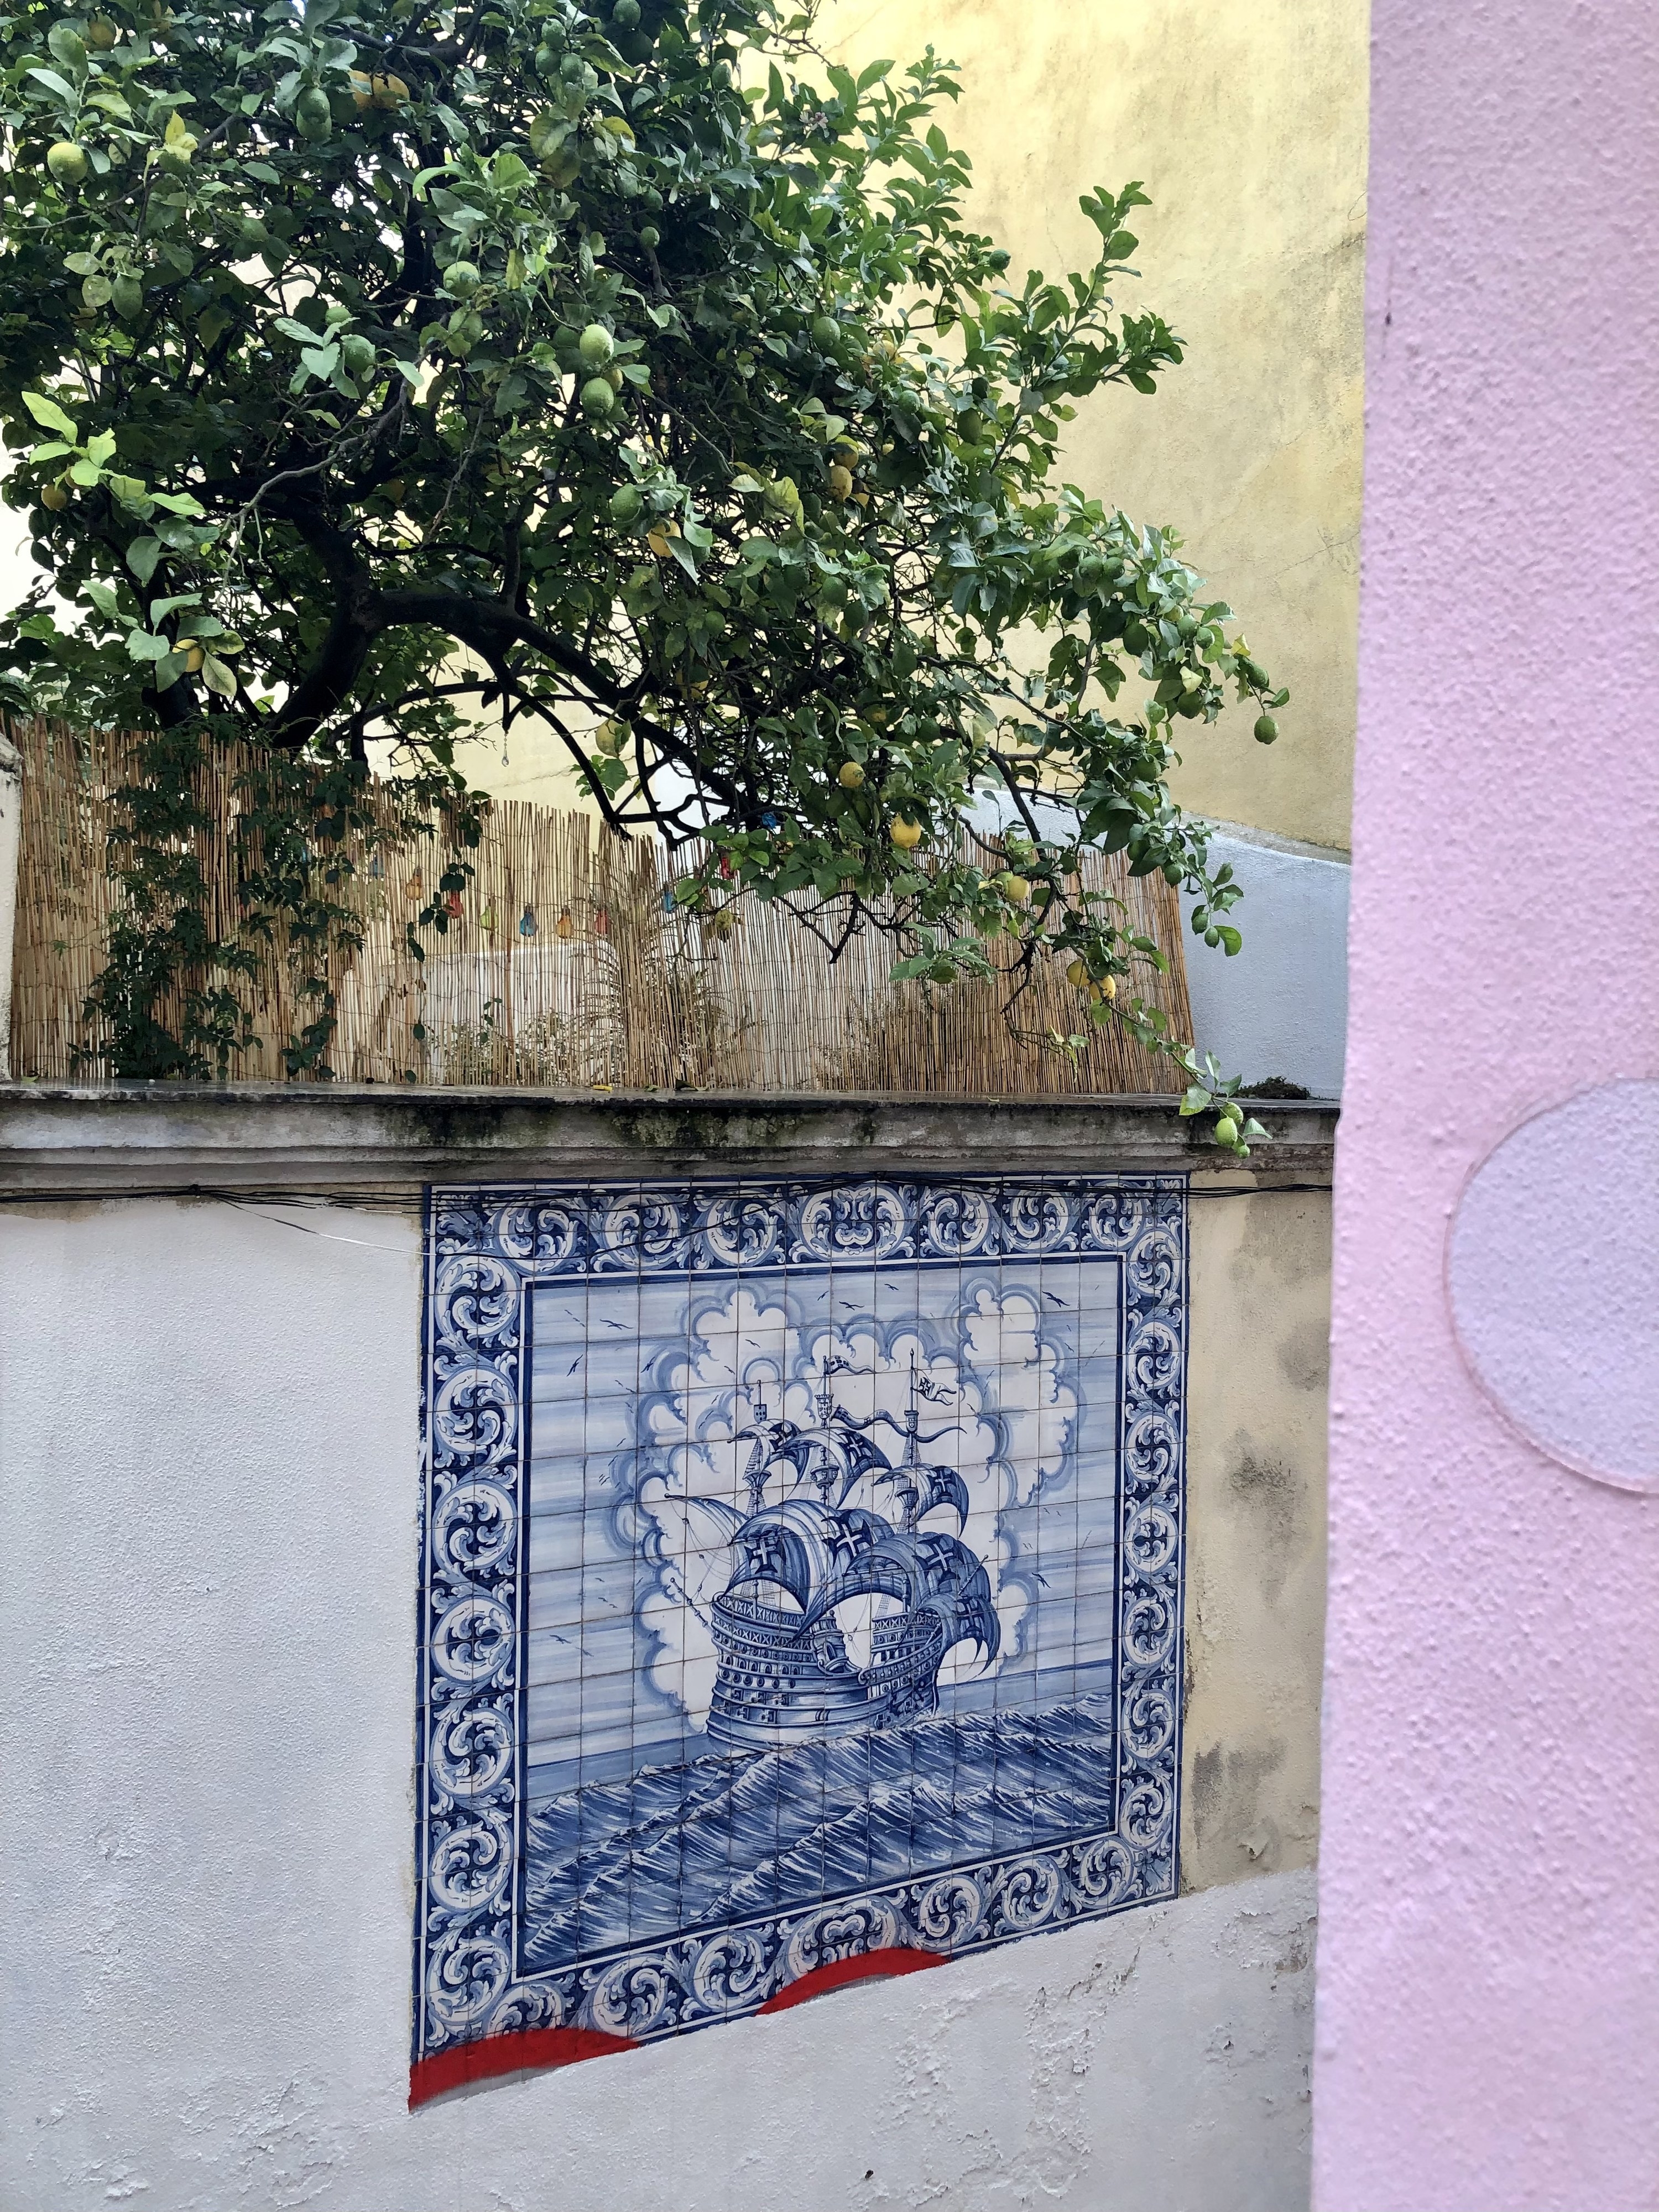 Street art in Lisbon mimicking tiles.